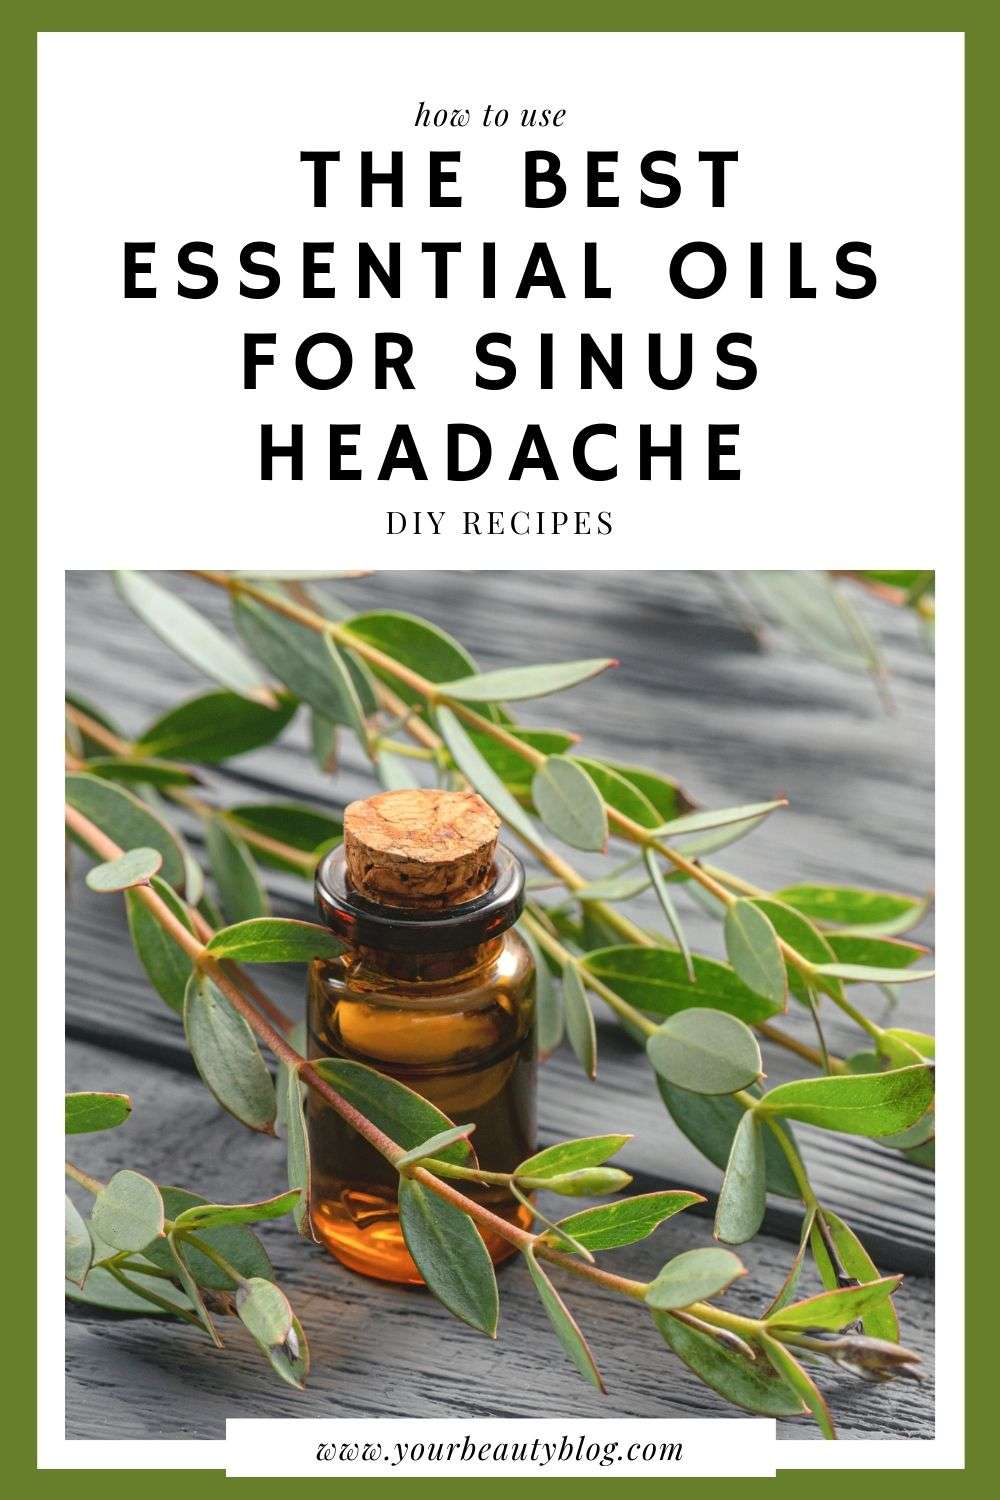 The Best Essential Oils for Sinus Headache